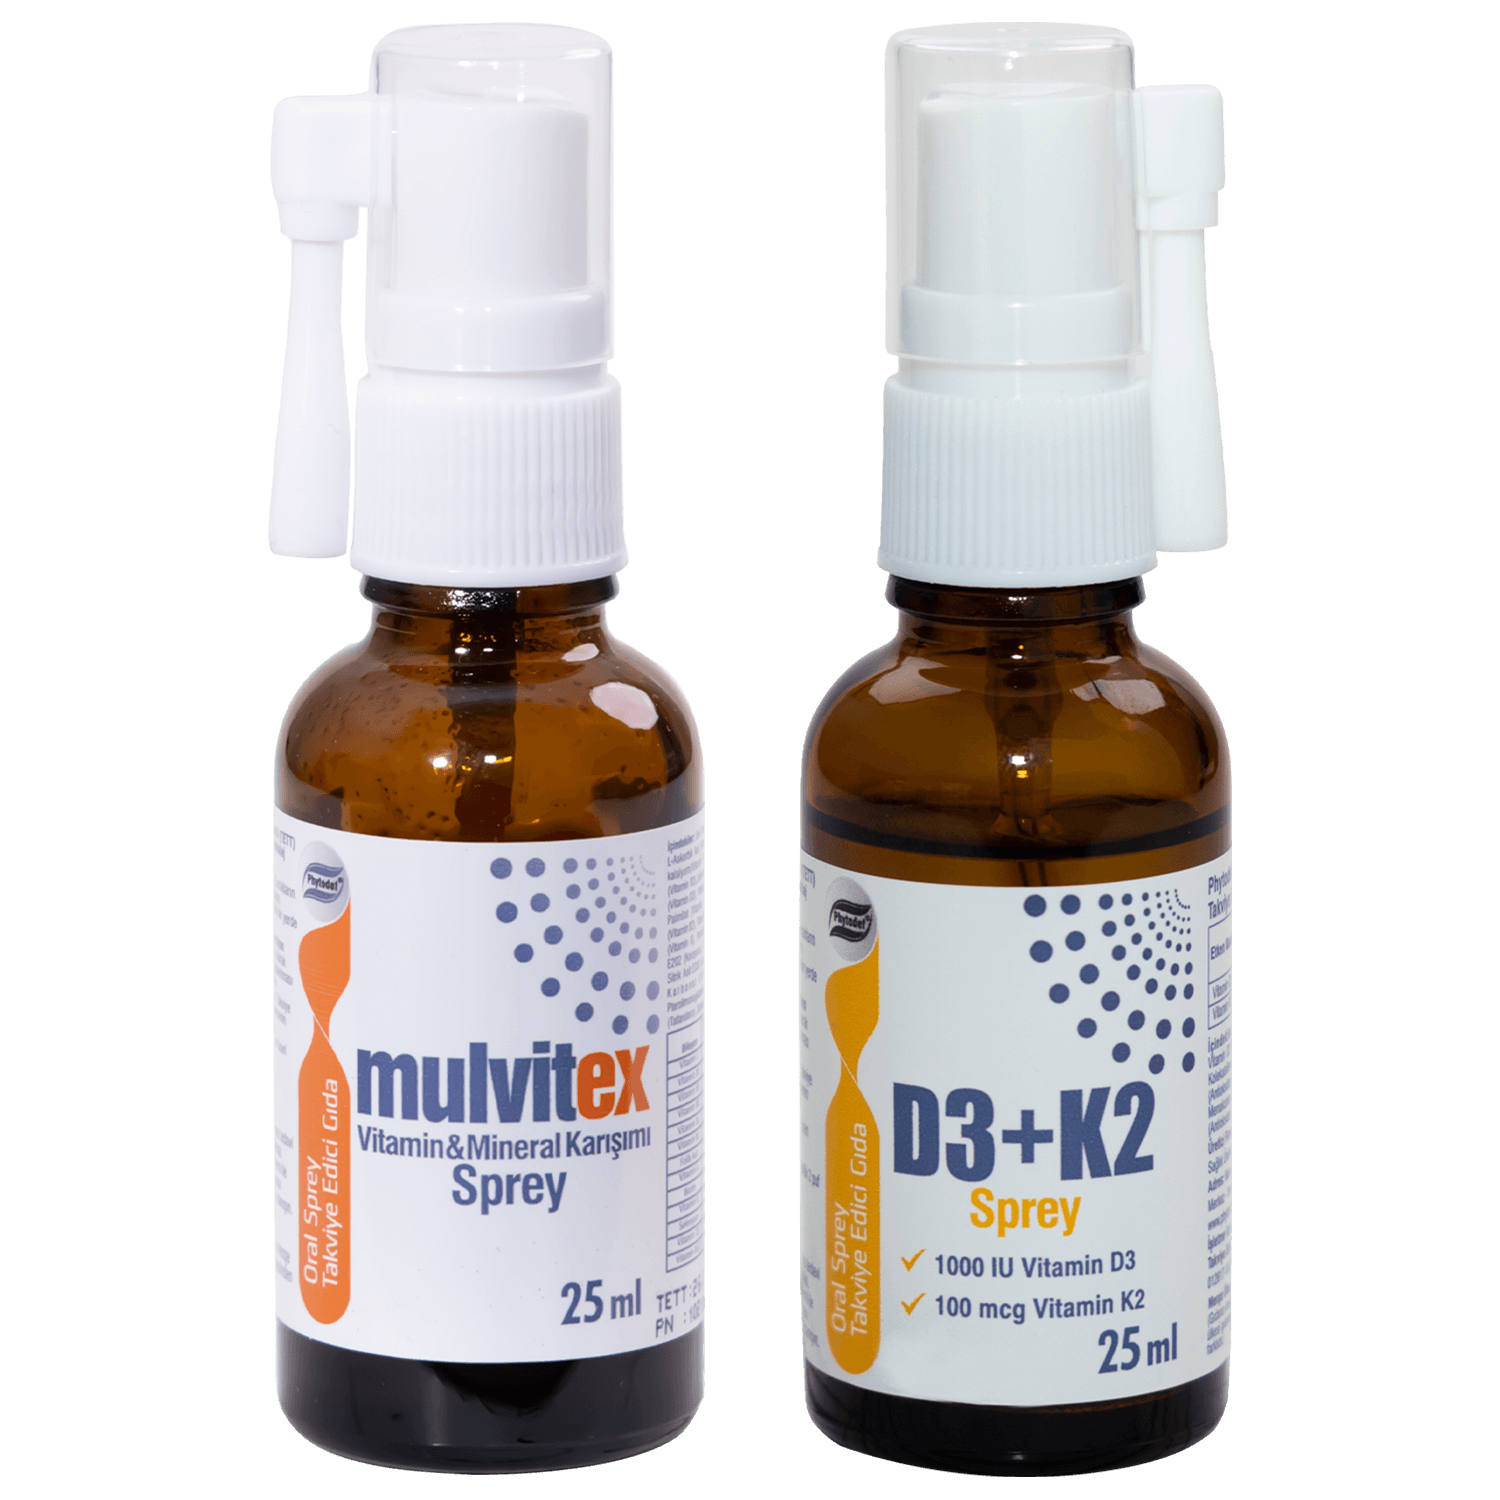 D3 + K2 Sprey - 25 ml & Mulvitex Multivitamin Sprey - 25 ml